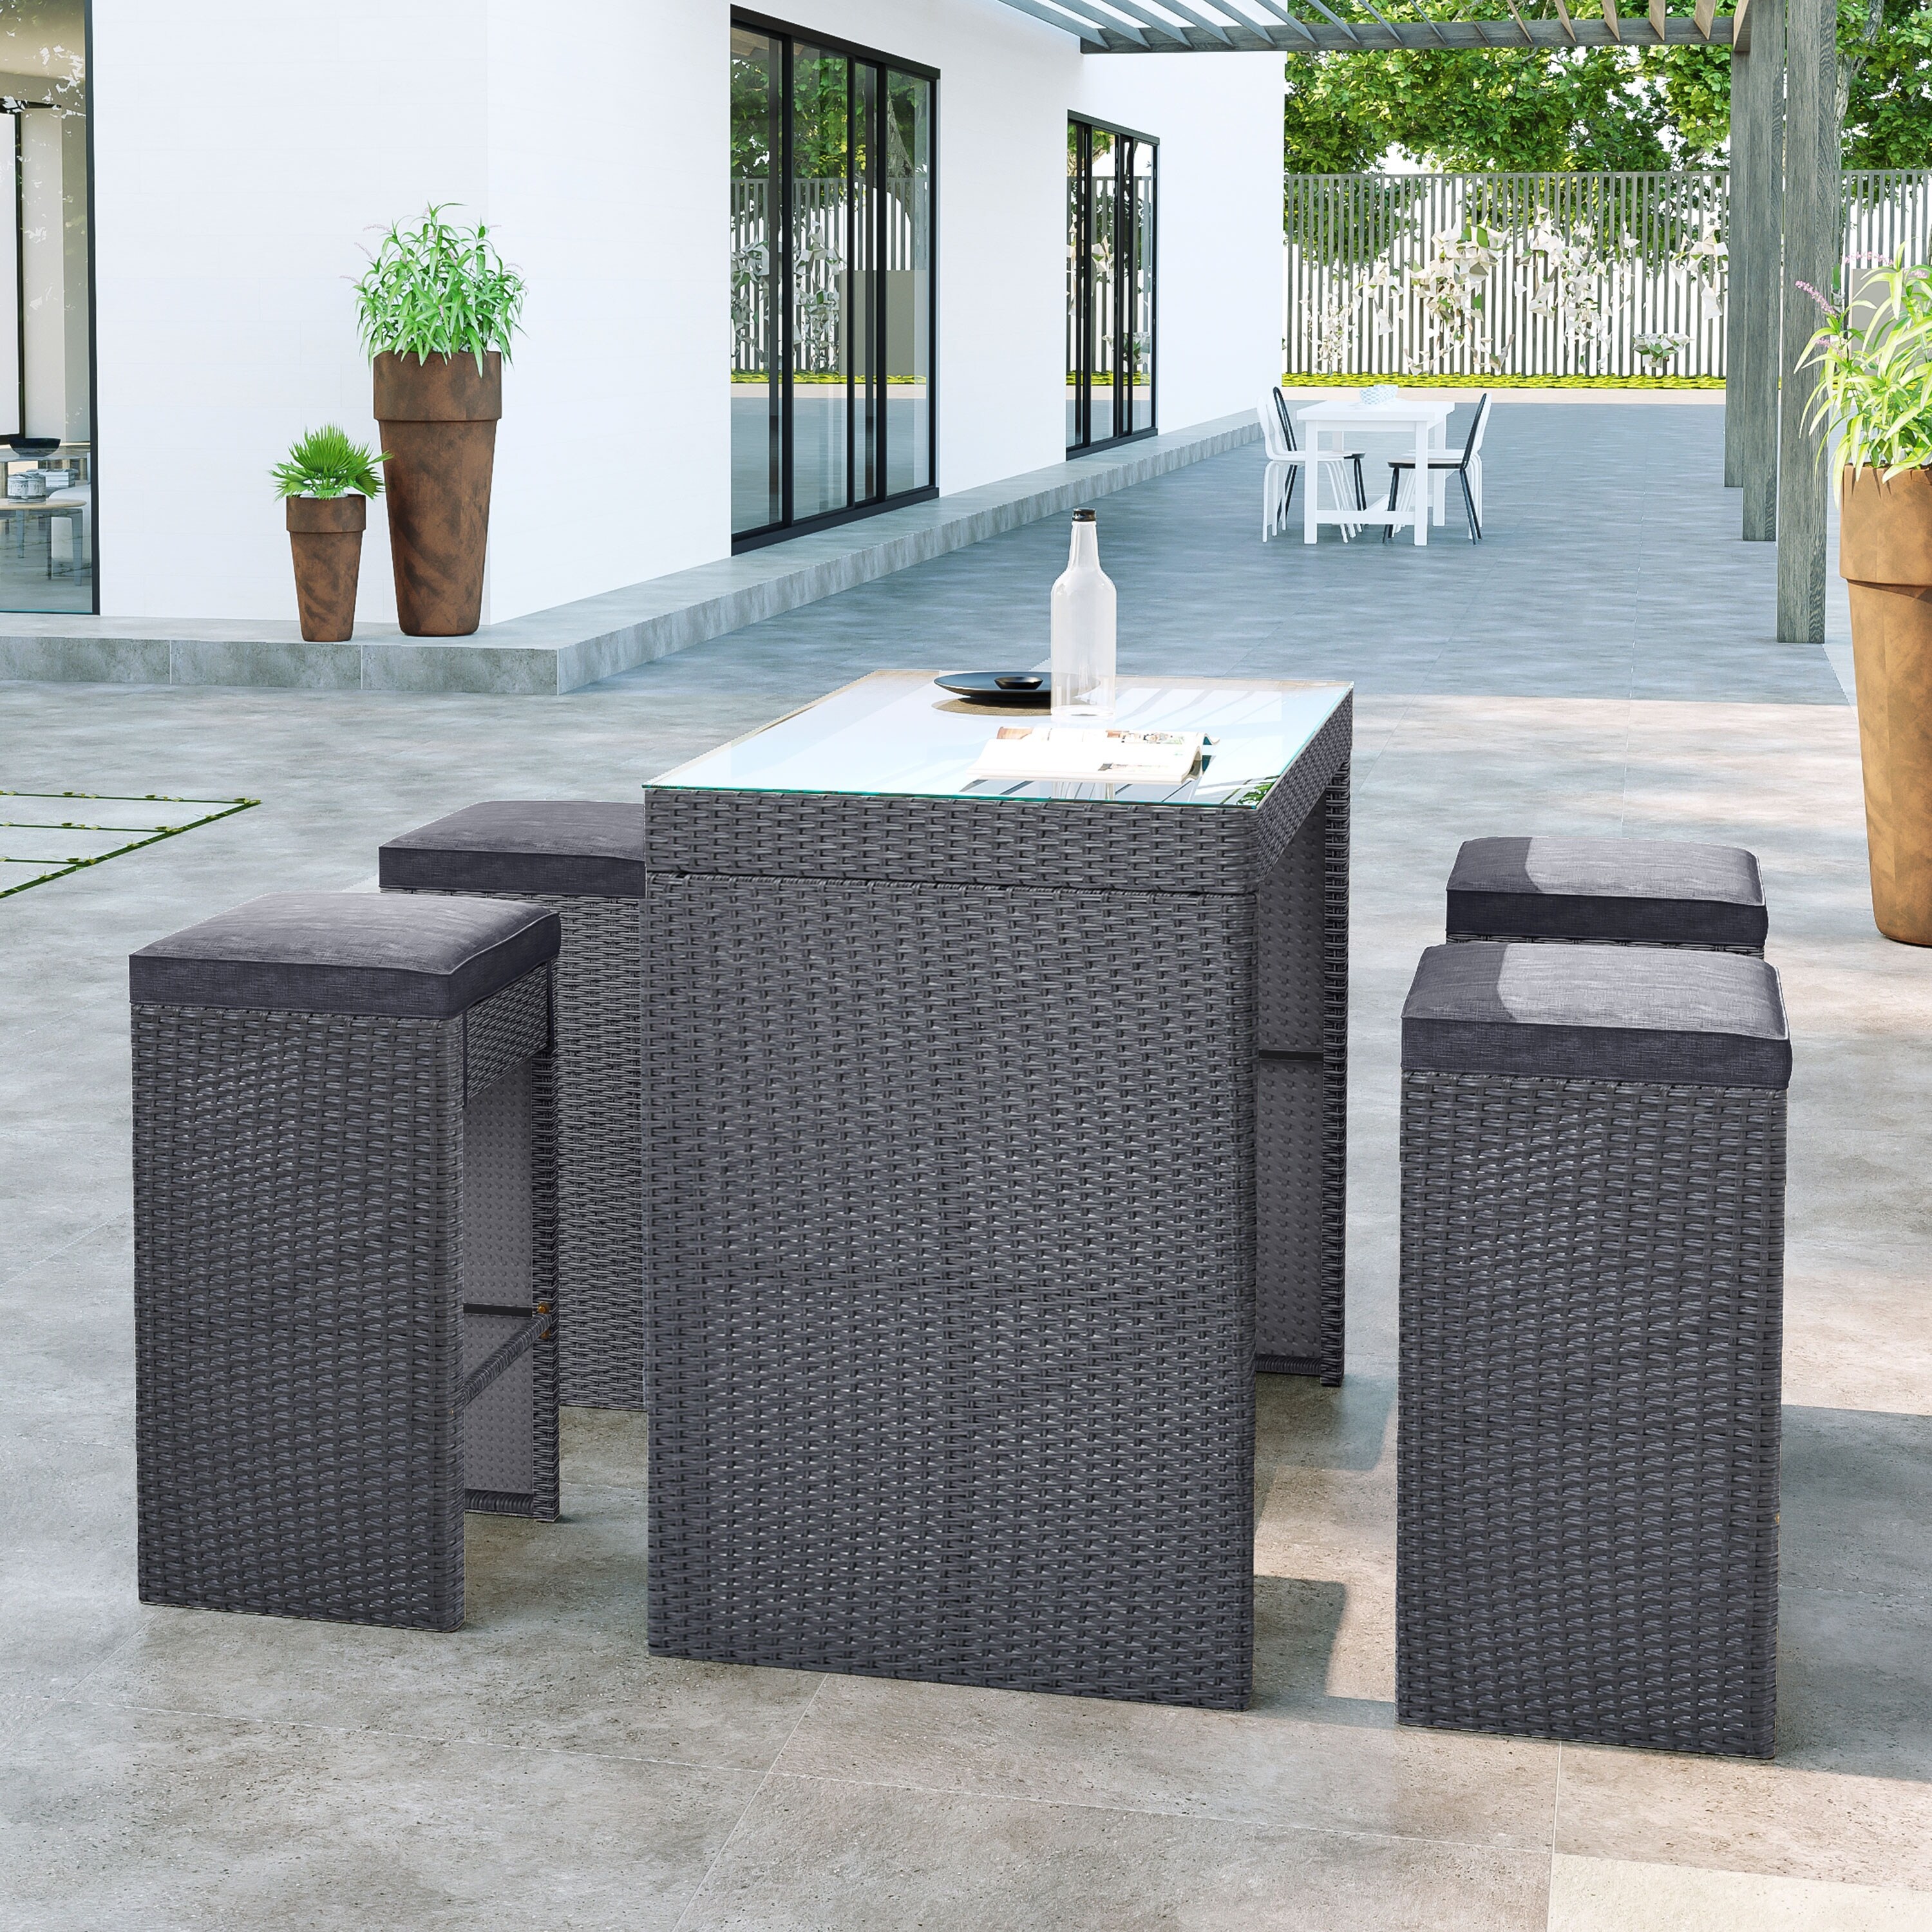 5-piece Rattan Outdoor Patio Furniture Set Bar Dining Table